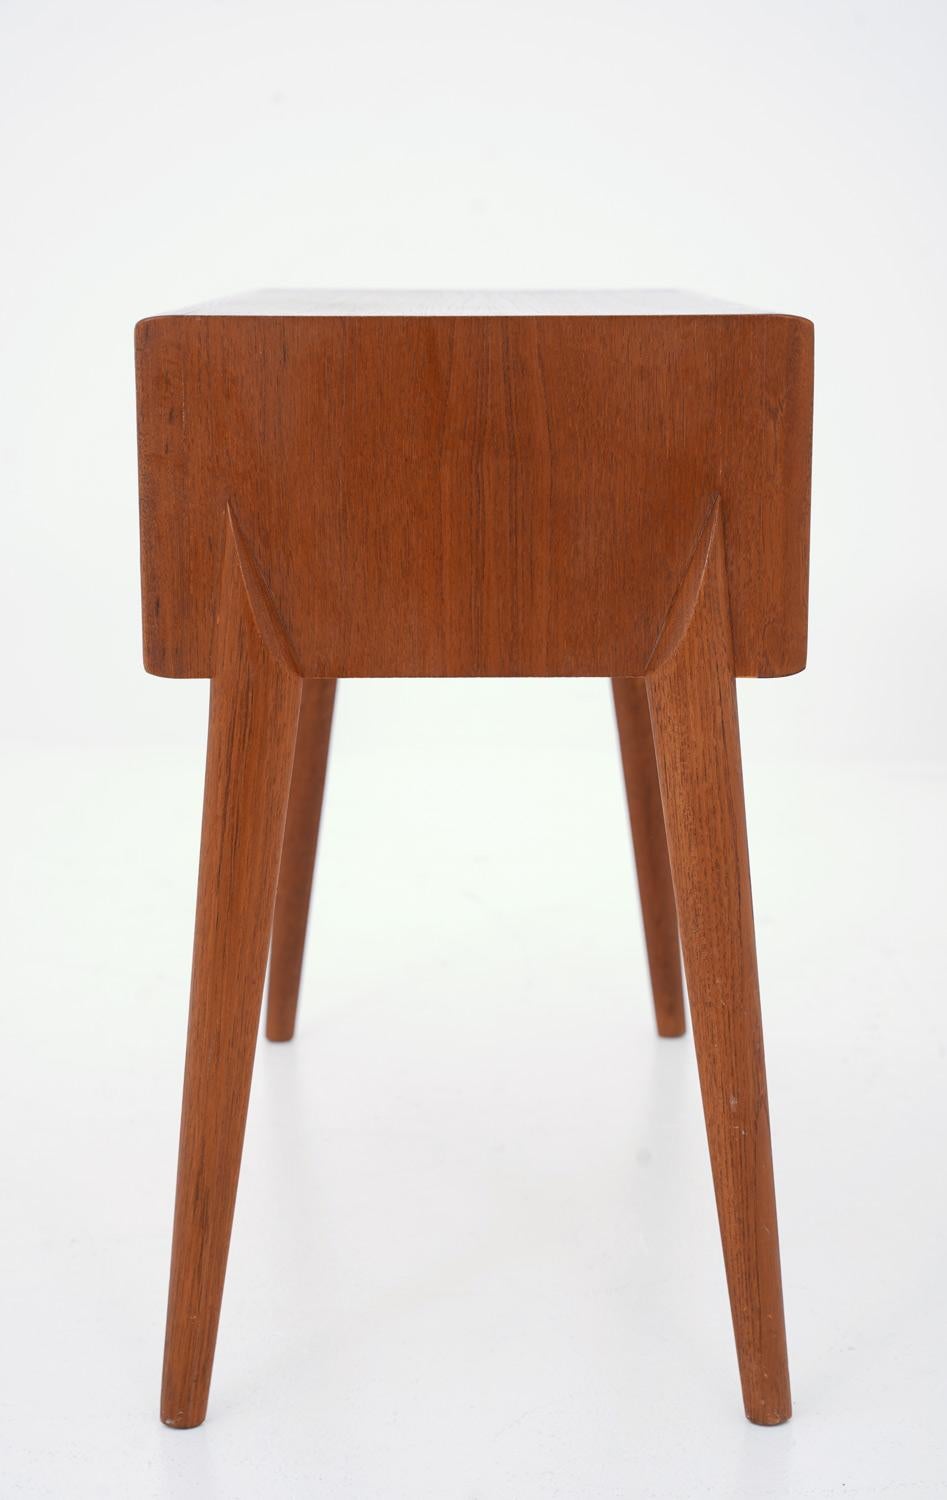 Scandinavian Modern Midcentury Scandinavian Side Table by Rimbert Sandholt for Glas & Trä For Sale